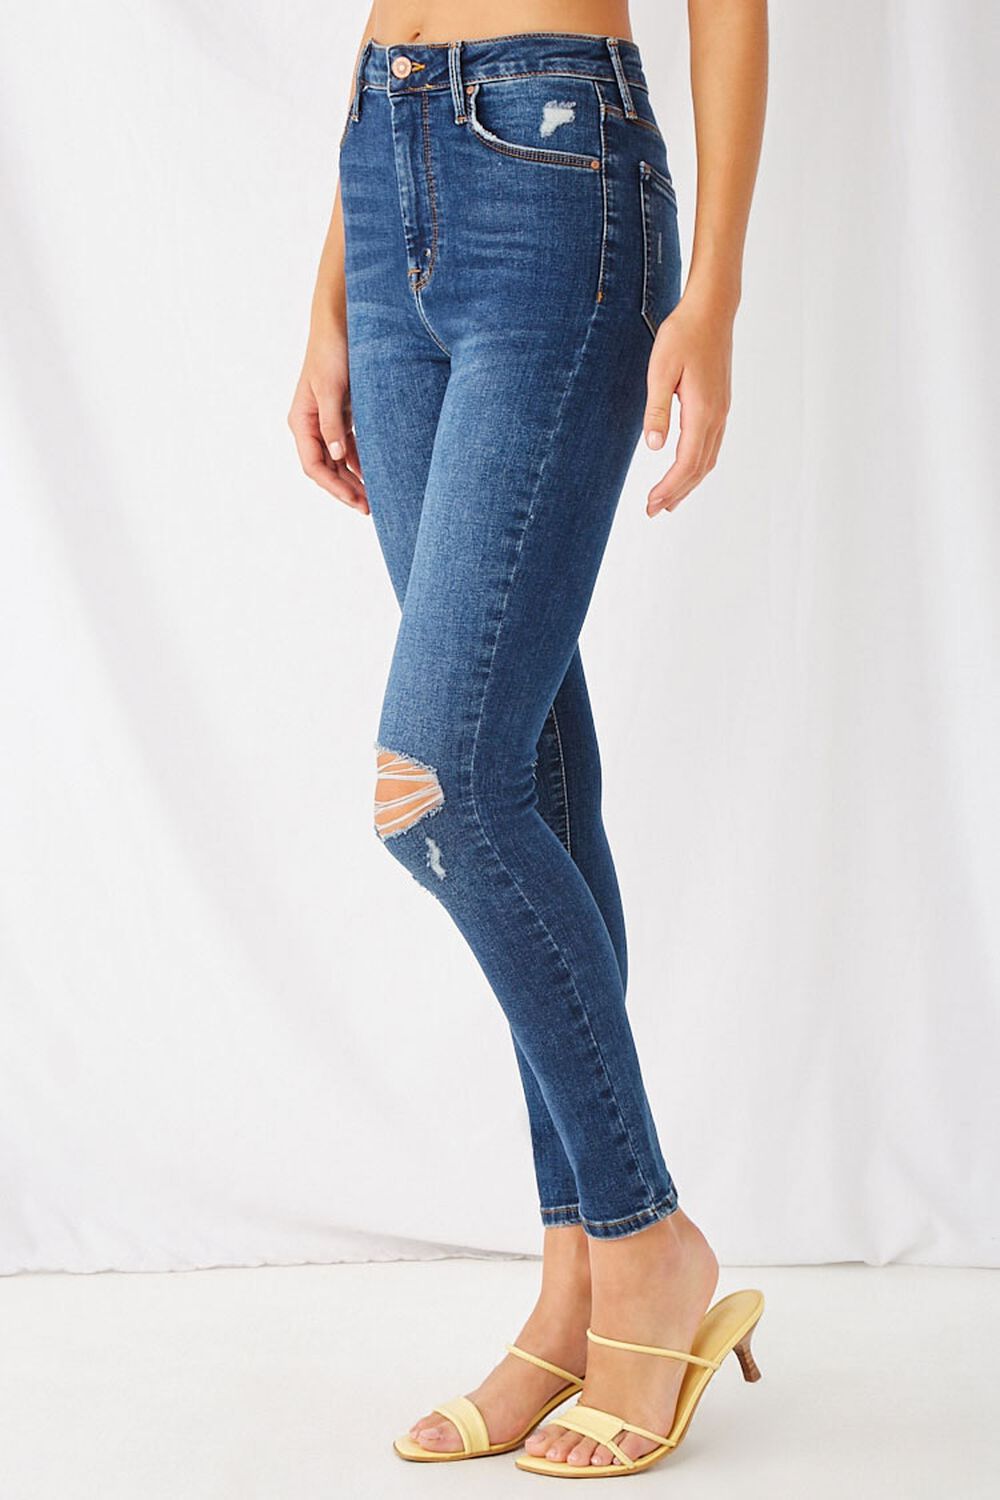 DARK DENIM Super Skinny Distressed Jeans, image 3